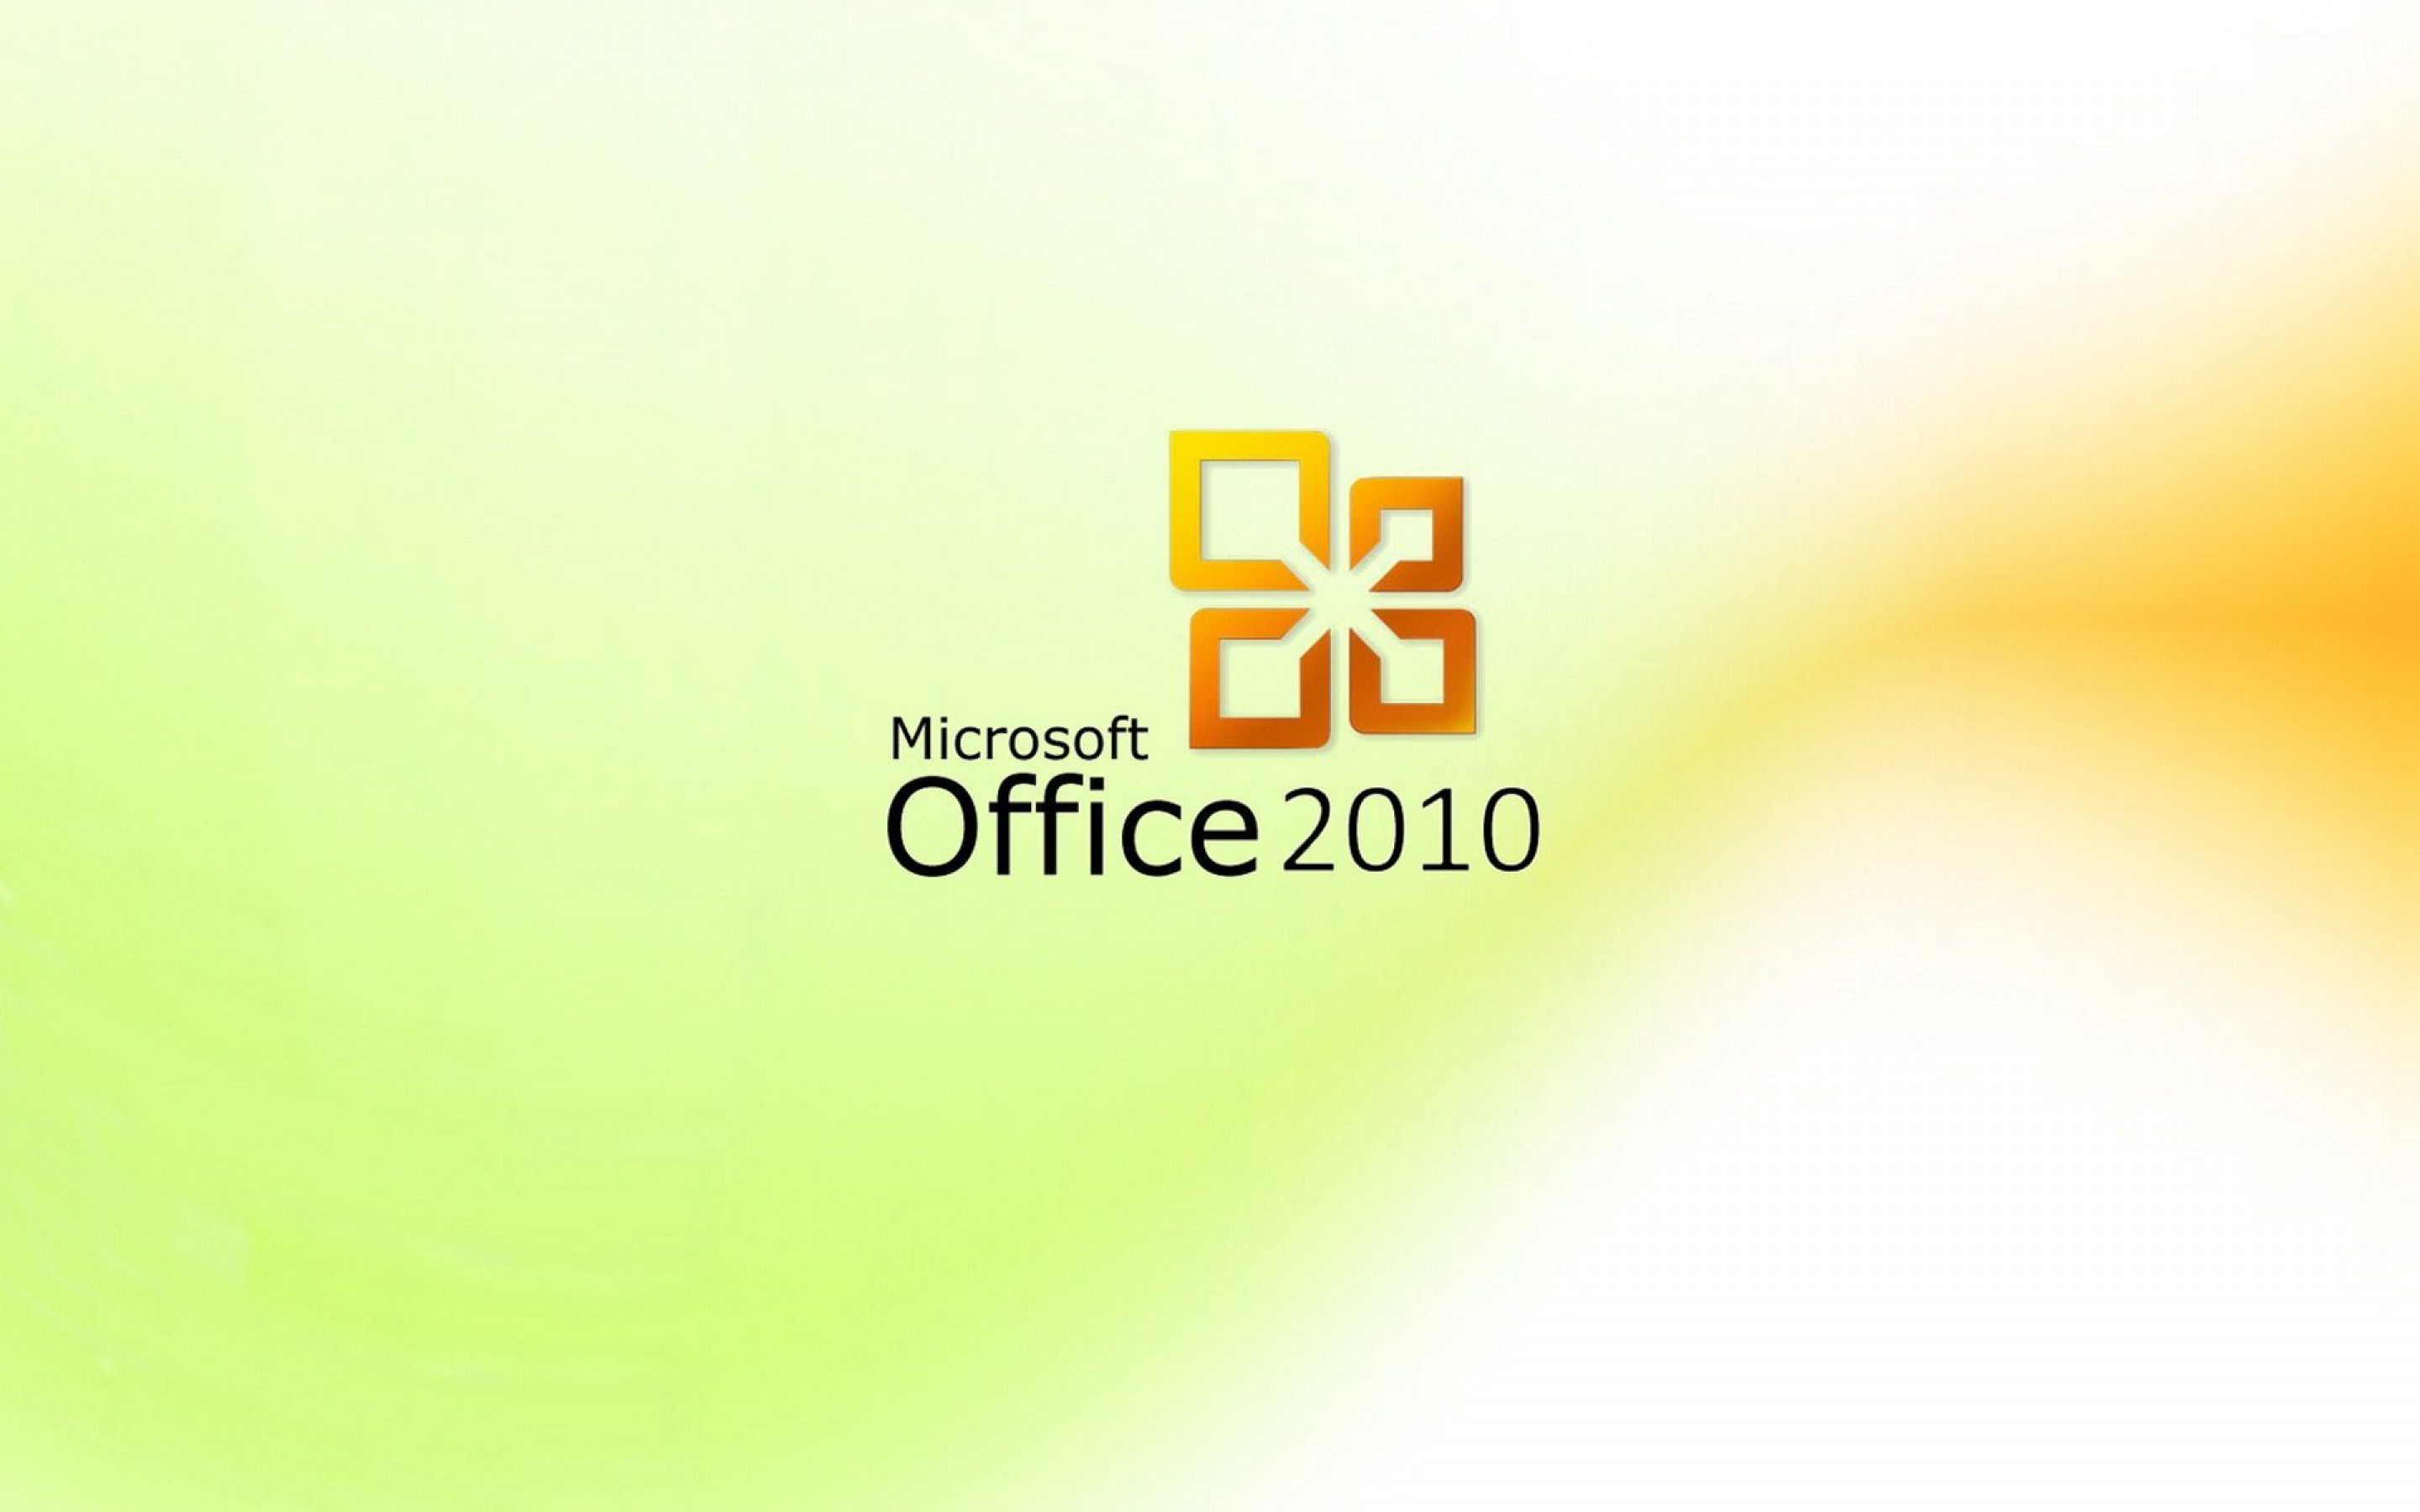 Microsoft Office 2010 HD wallpaper